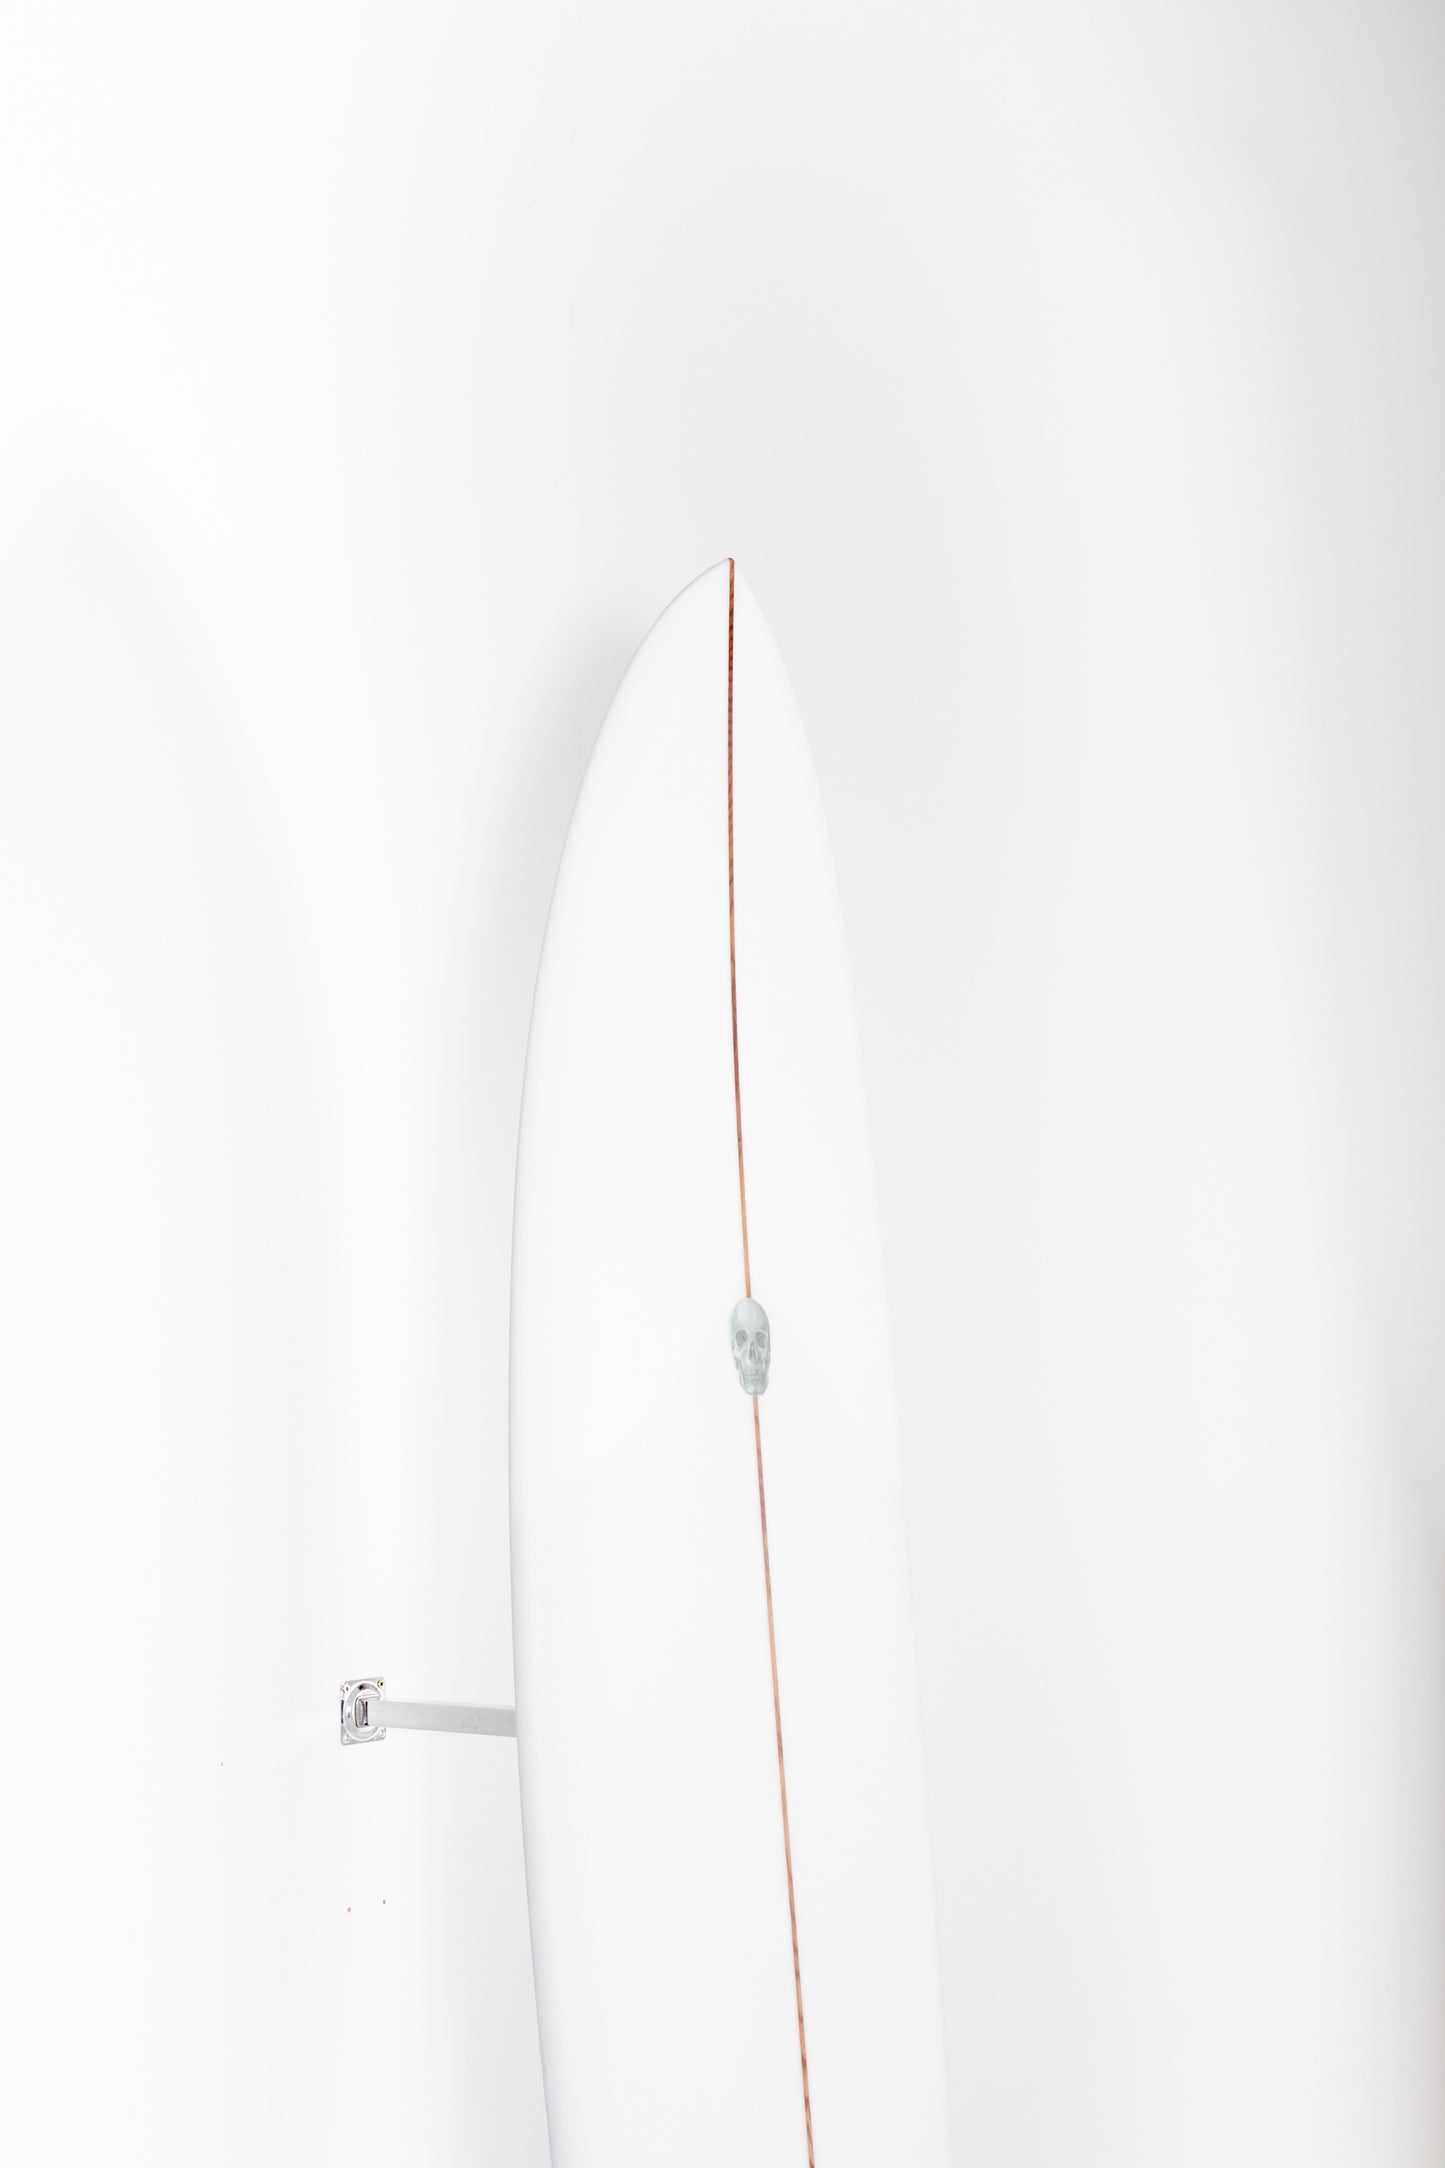 
                  
                    Pukas Surf Shop - Christenson Surfboards - TWIN TRACKER - 7'6" x 21 1/4  x 2 7/8 - CX03298
                  
                